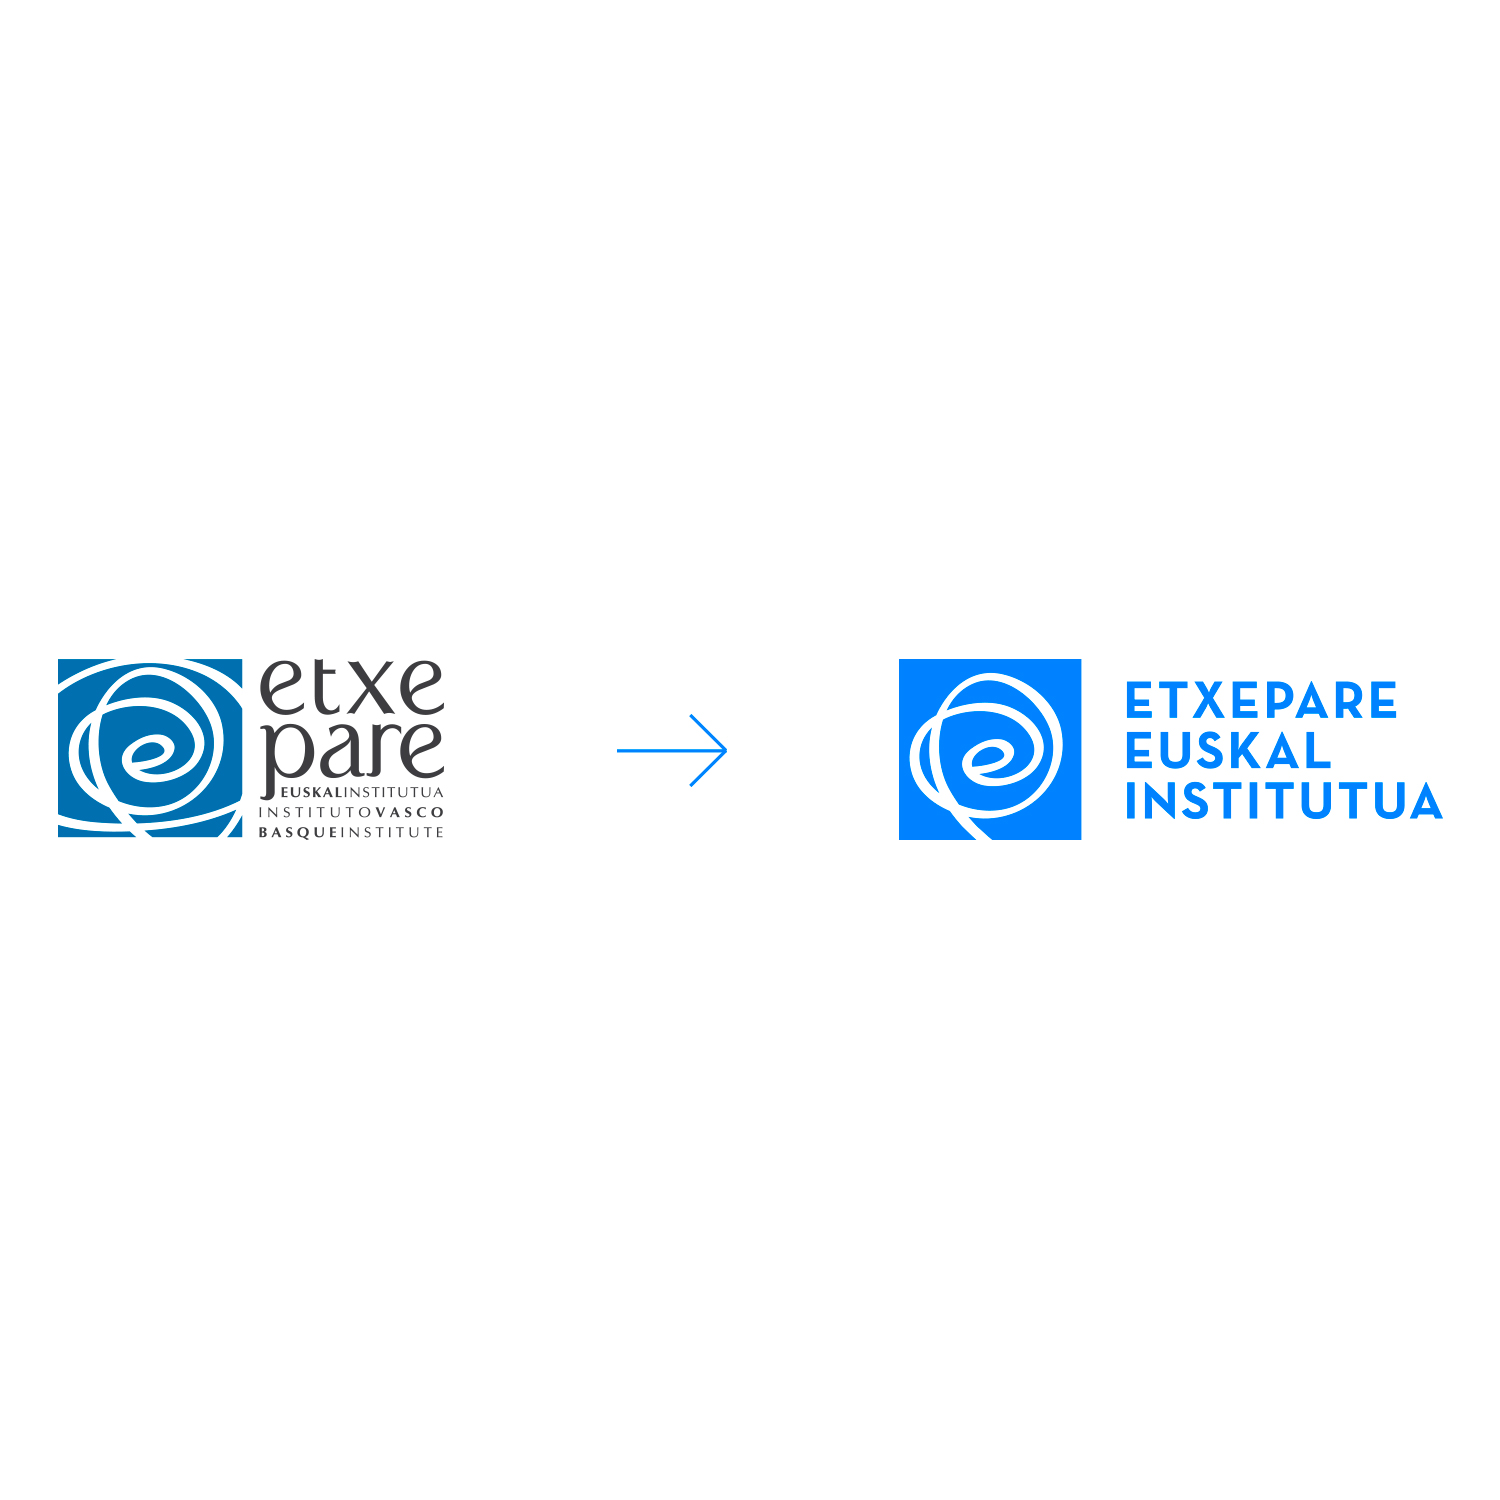 branding spaces digital 01 move narrative etxepare logo design 